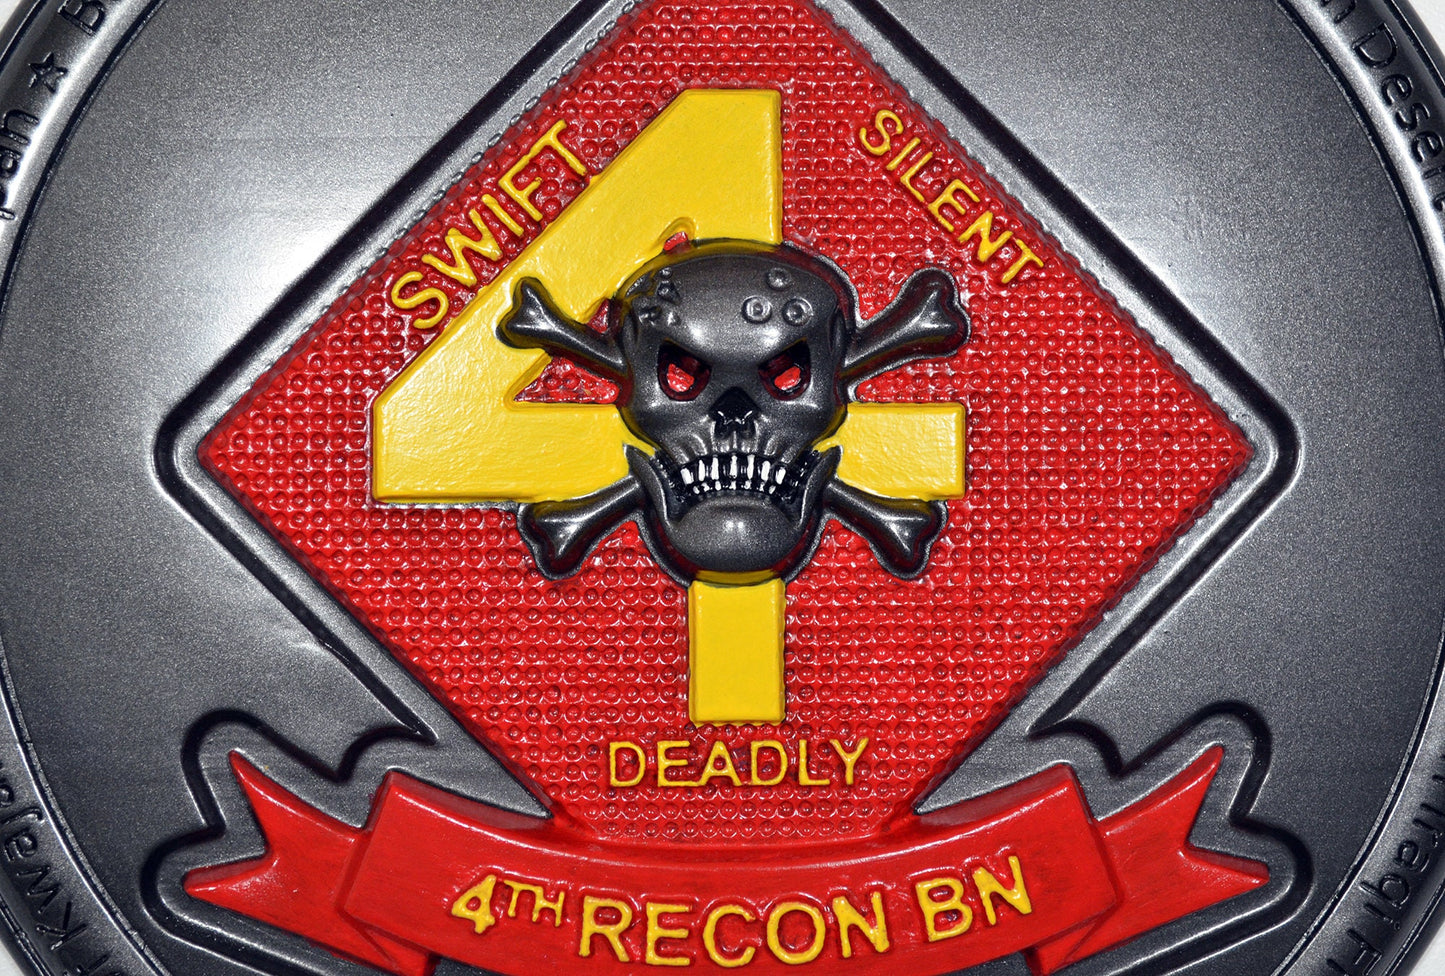 USMC 4th Reconnaissance Battalion, Marine Corps Special Forces, painted 3d wood carving, military plaque